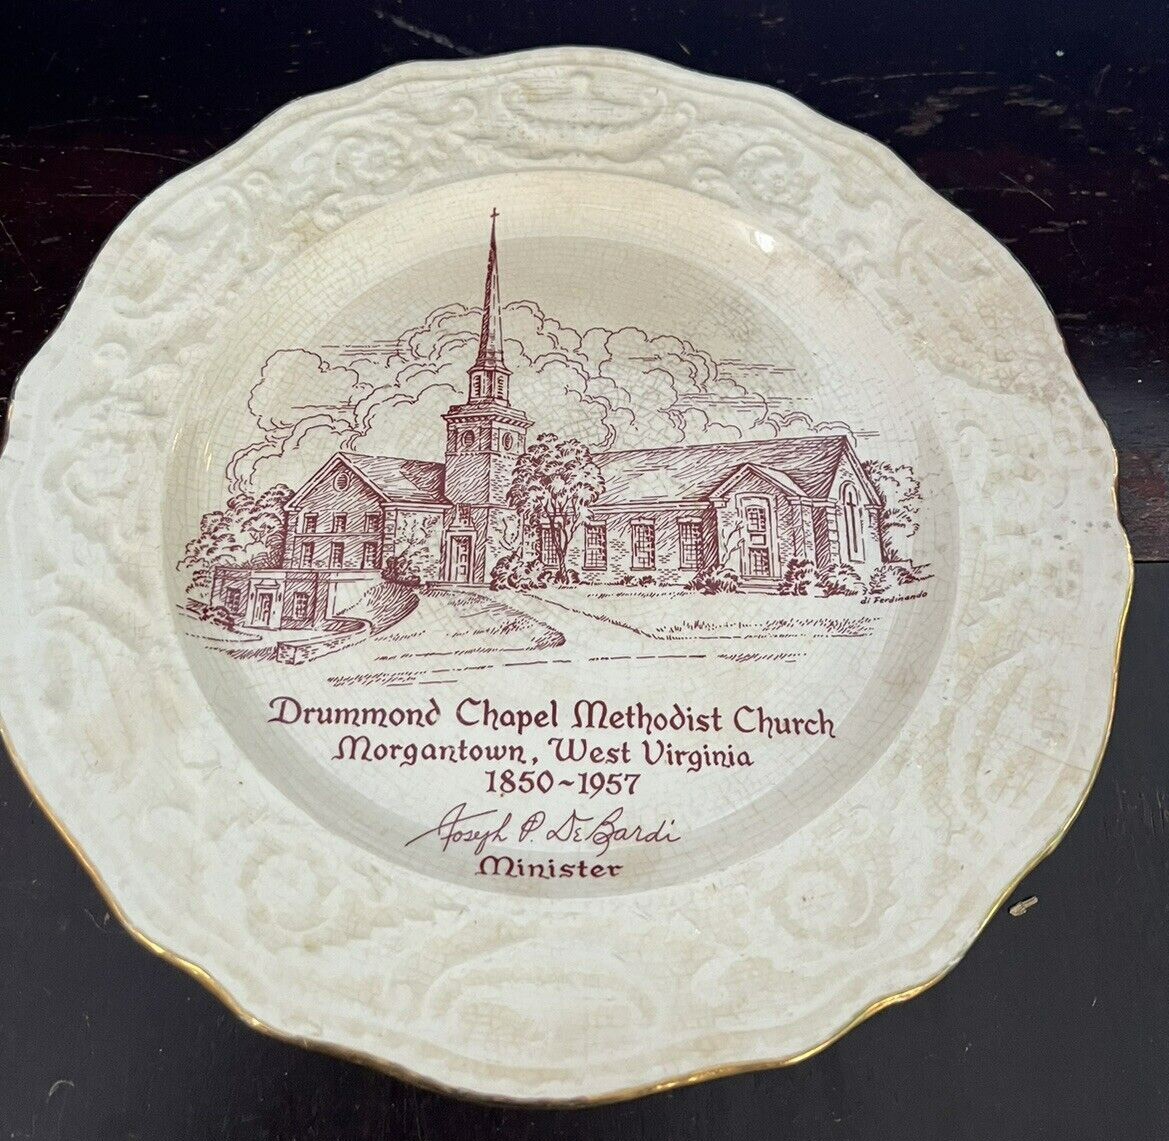 DRUMMOND CHAPEL METHODIST CHURCH MORGANTOWN, WEST VIRGINIA 1850-1957 PLATE